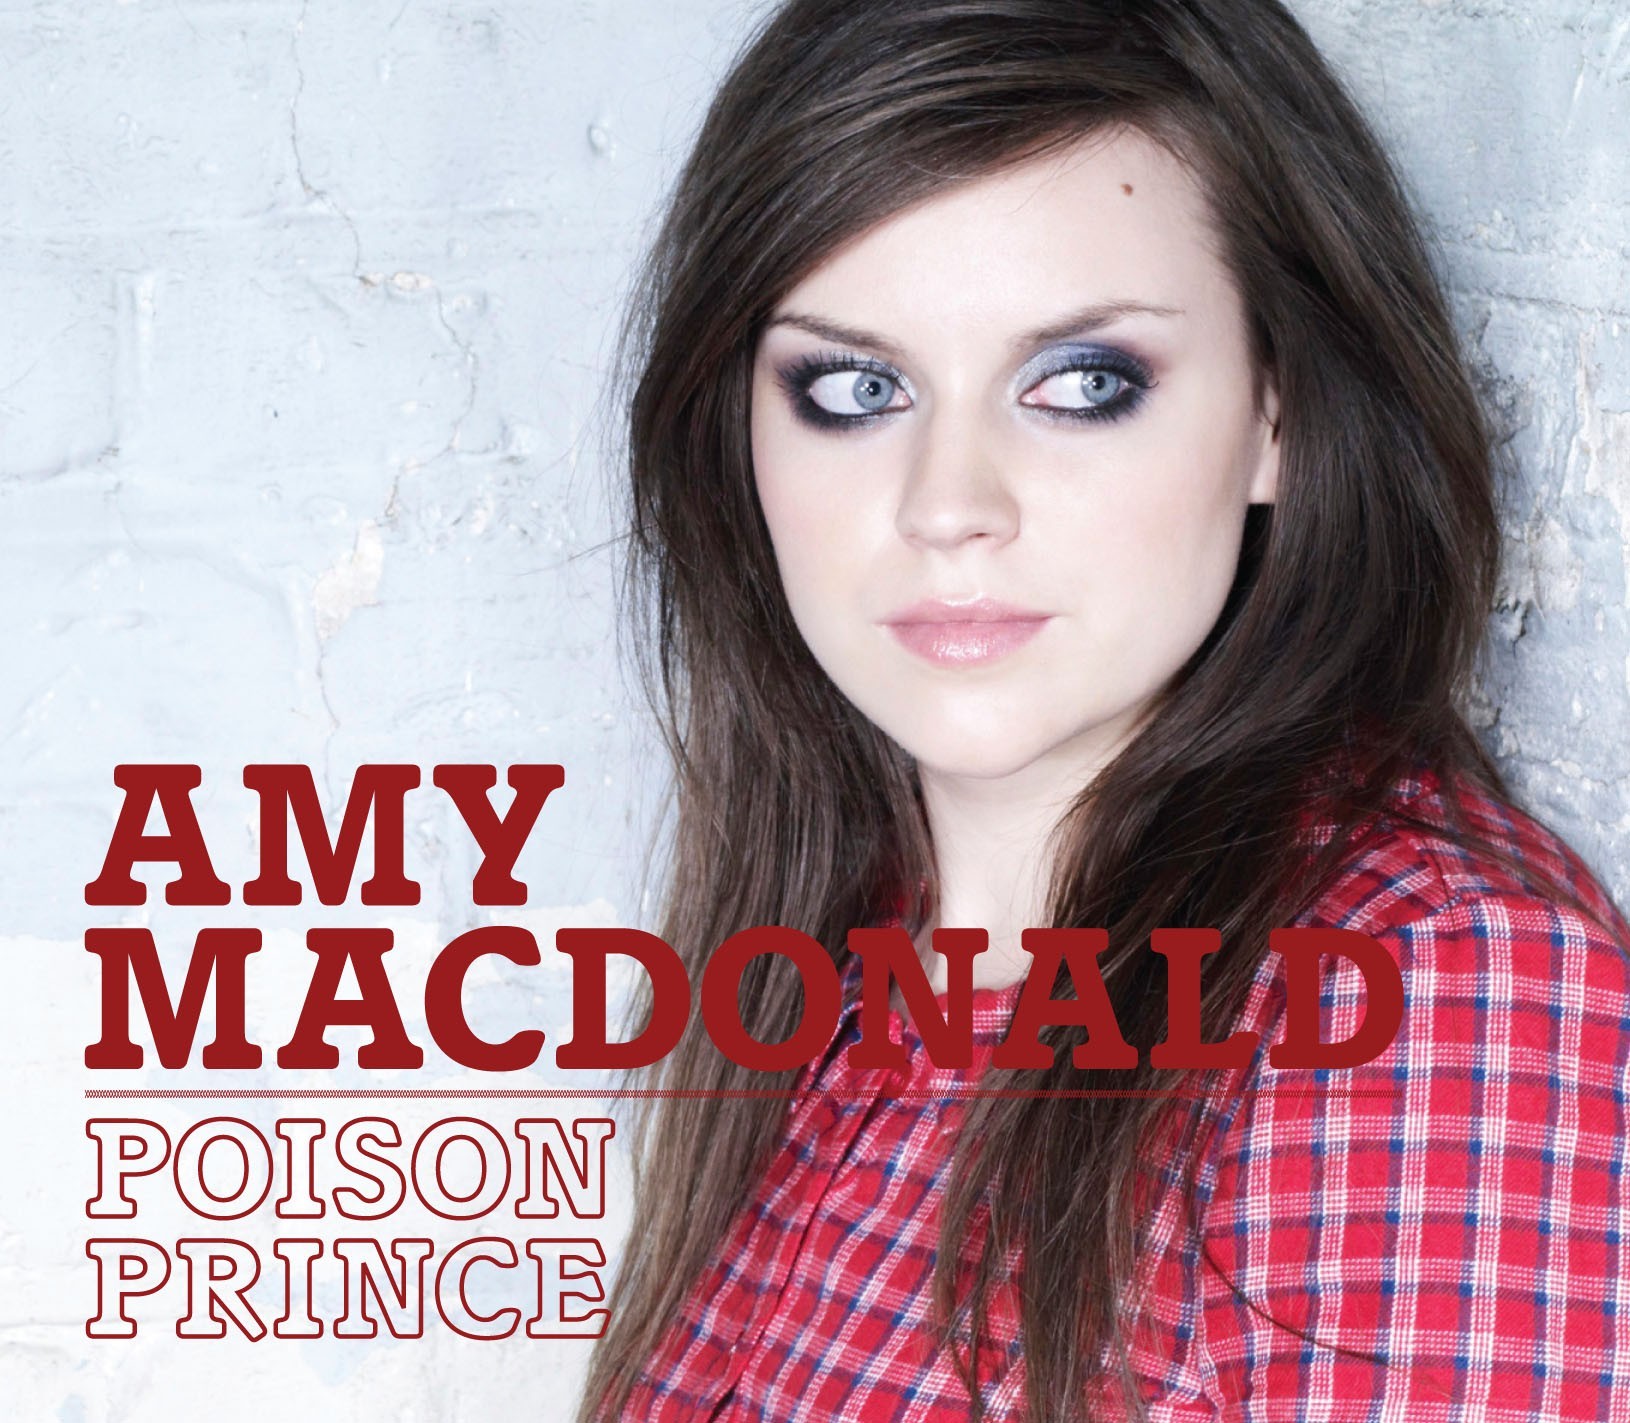 Amy Macdonald Poison Prince cover artwork